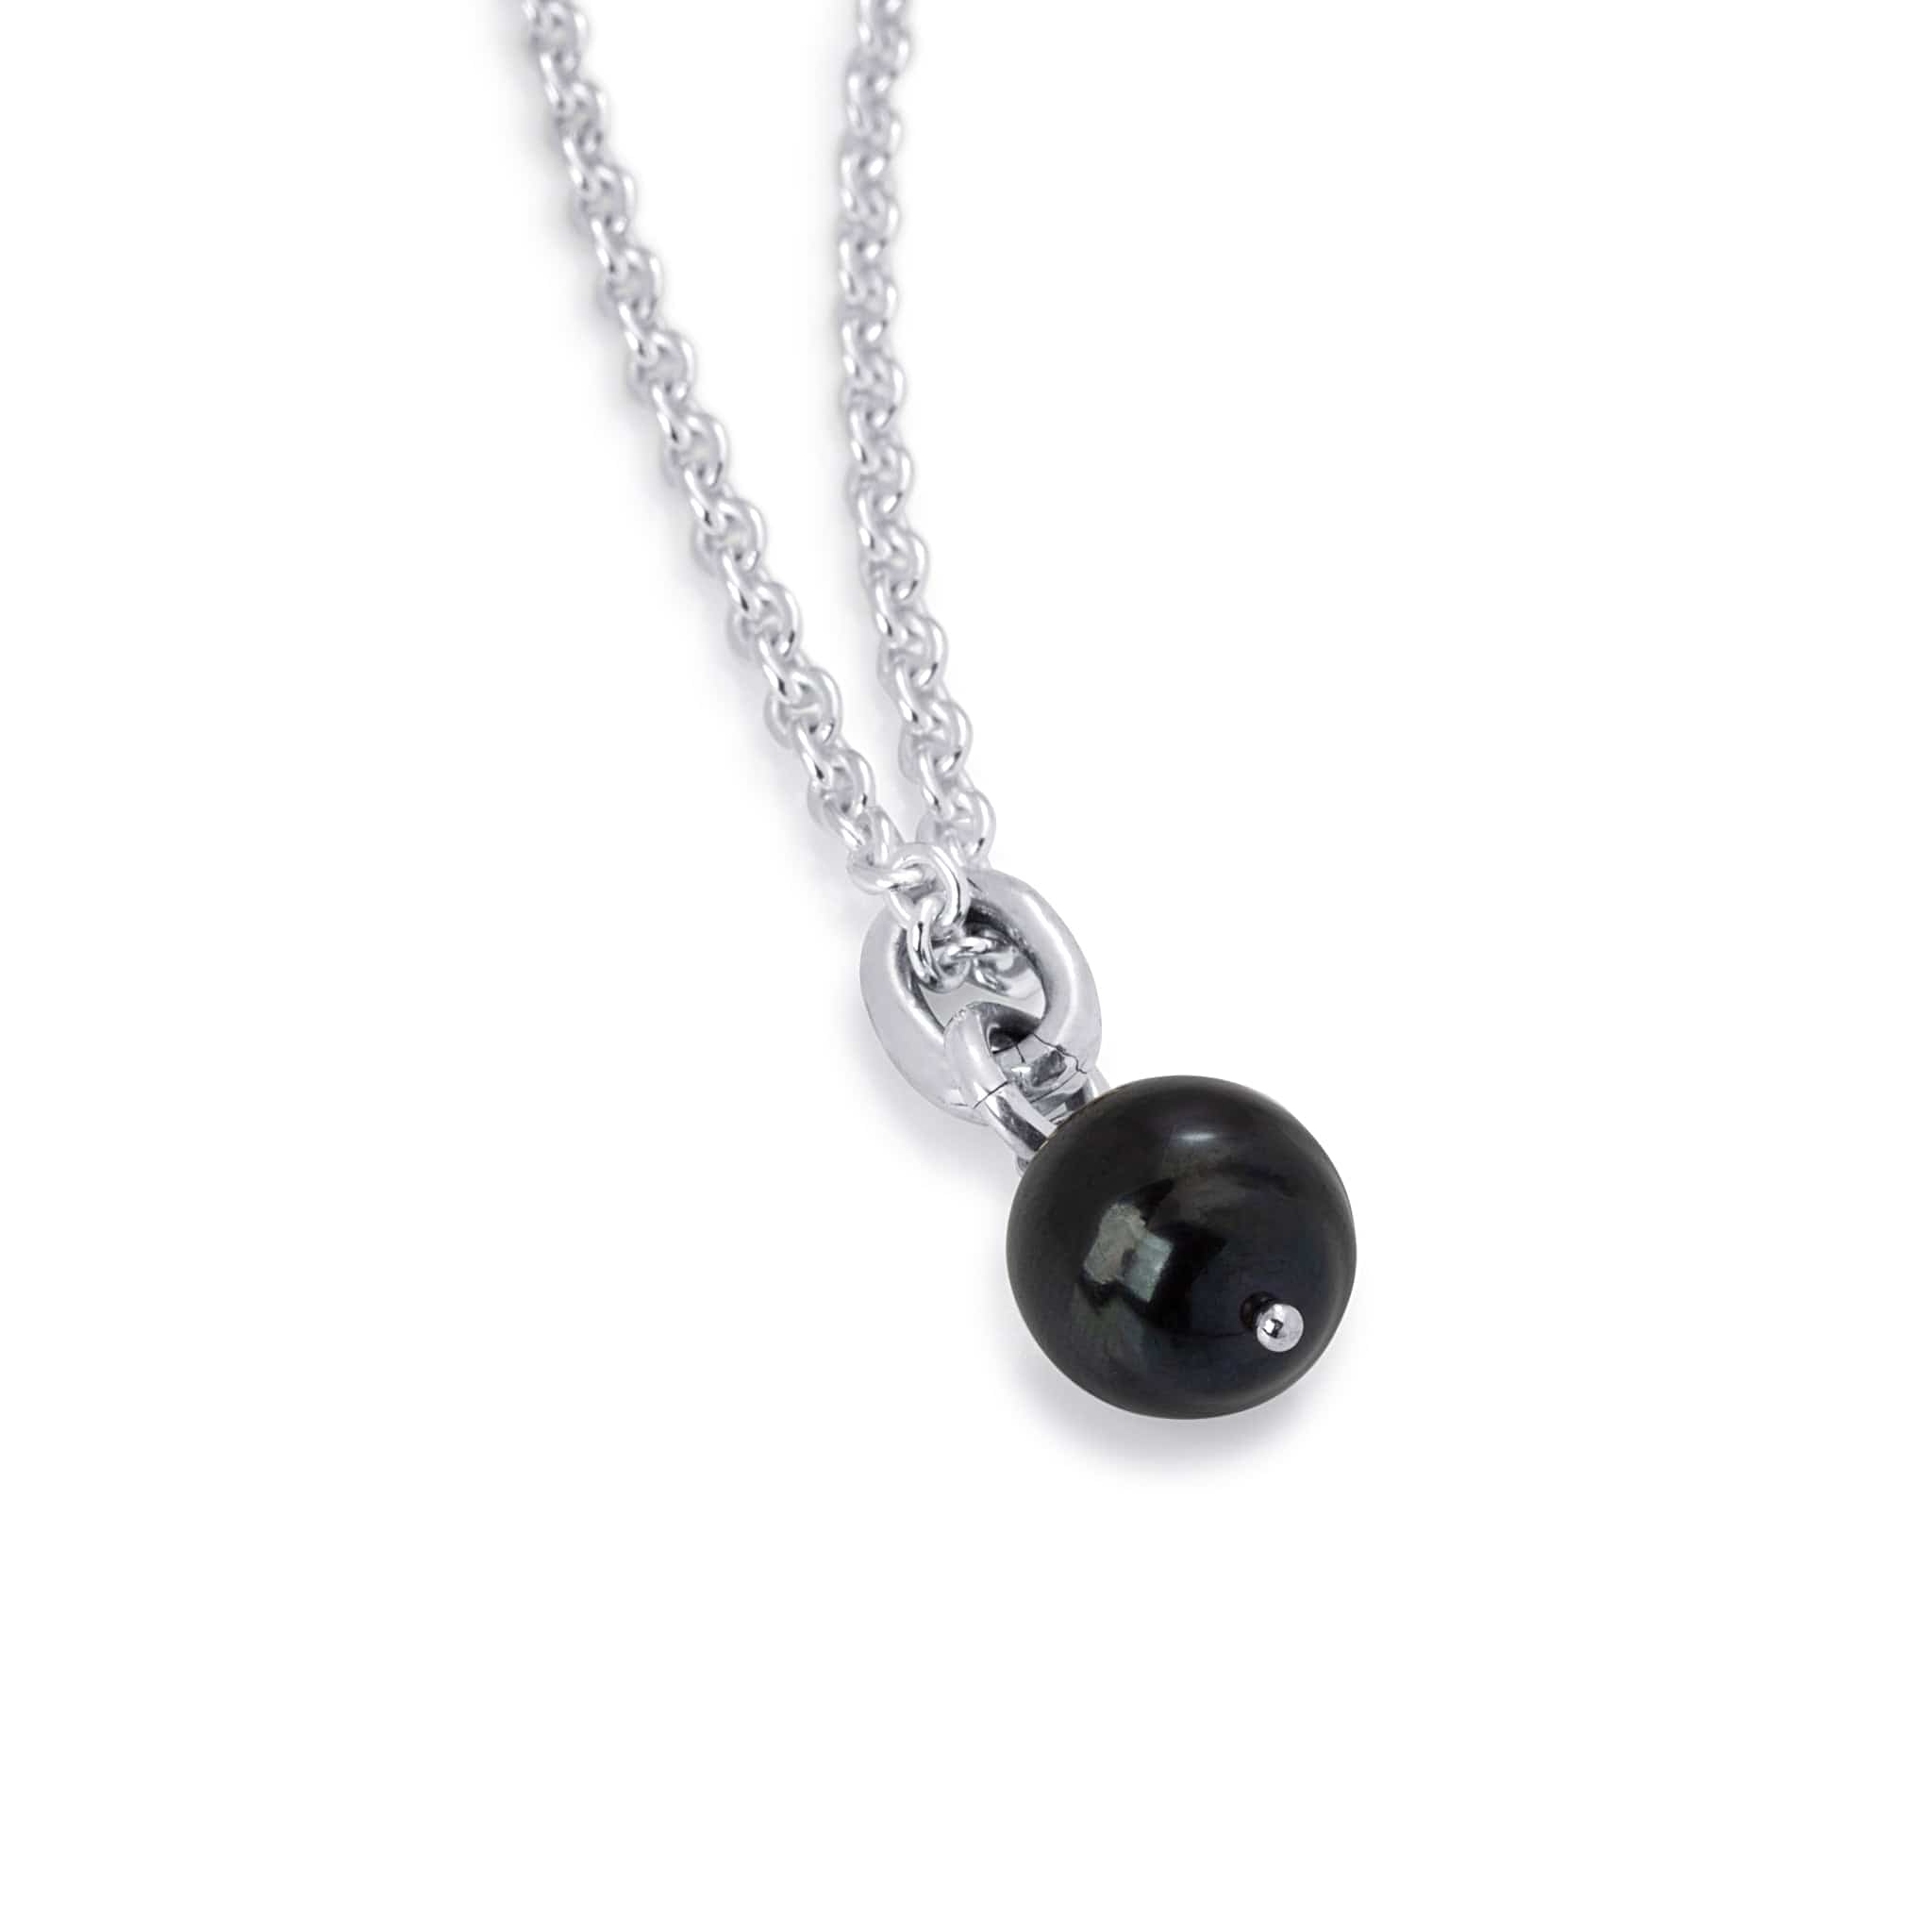 Bloodline Design M-Necklaces Black Pearl Necklace